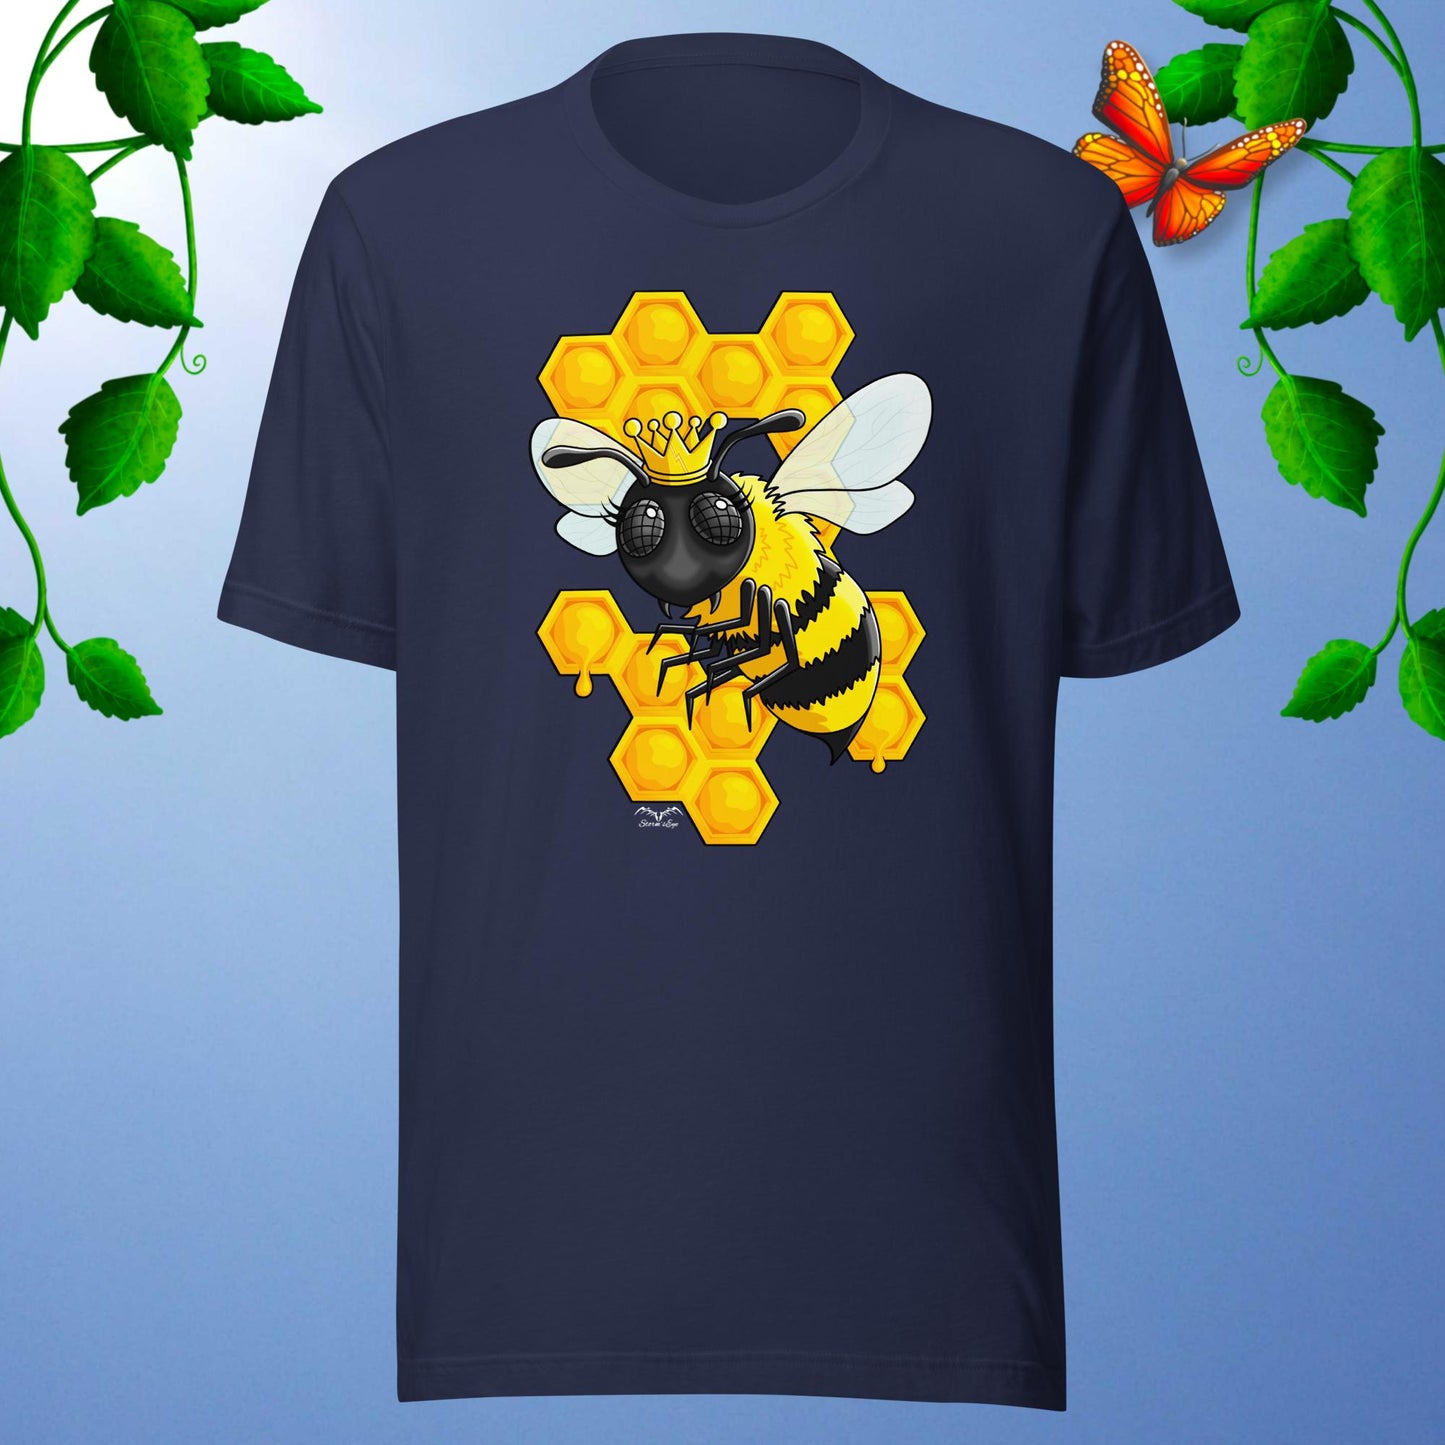 queen bee t-shirt navy blue by stormseye design